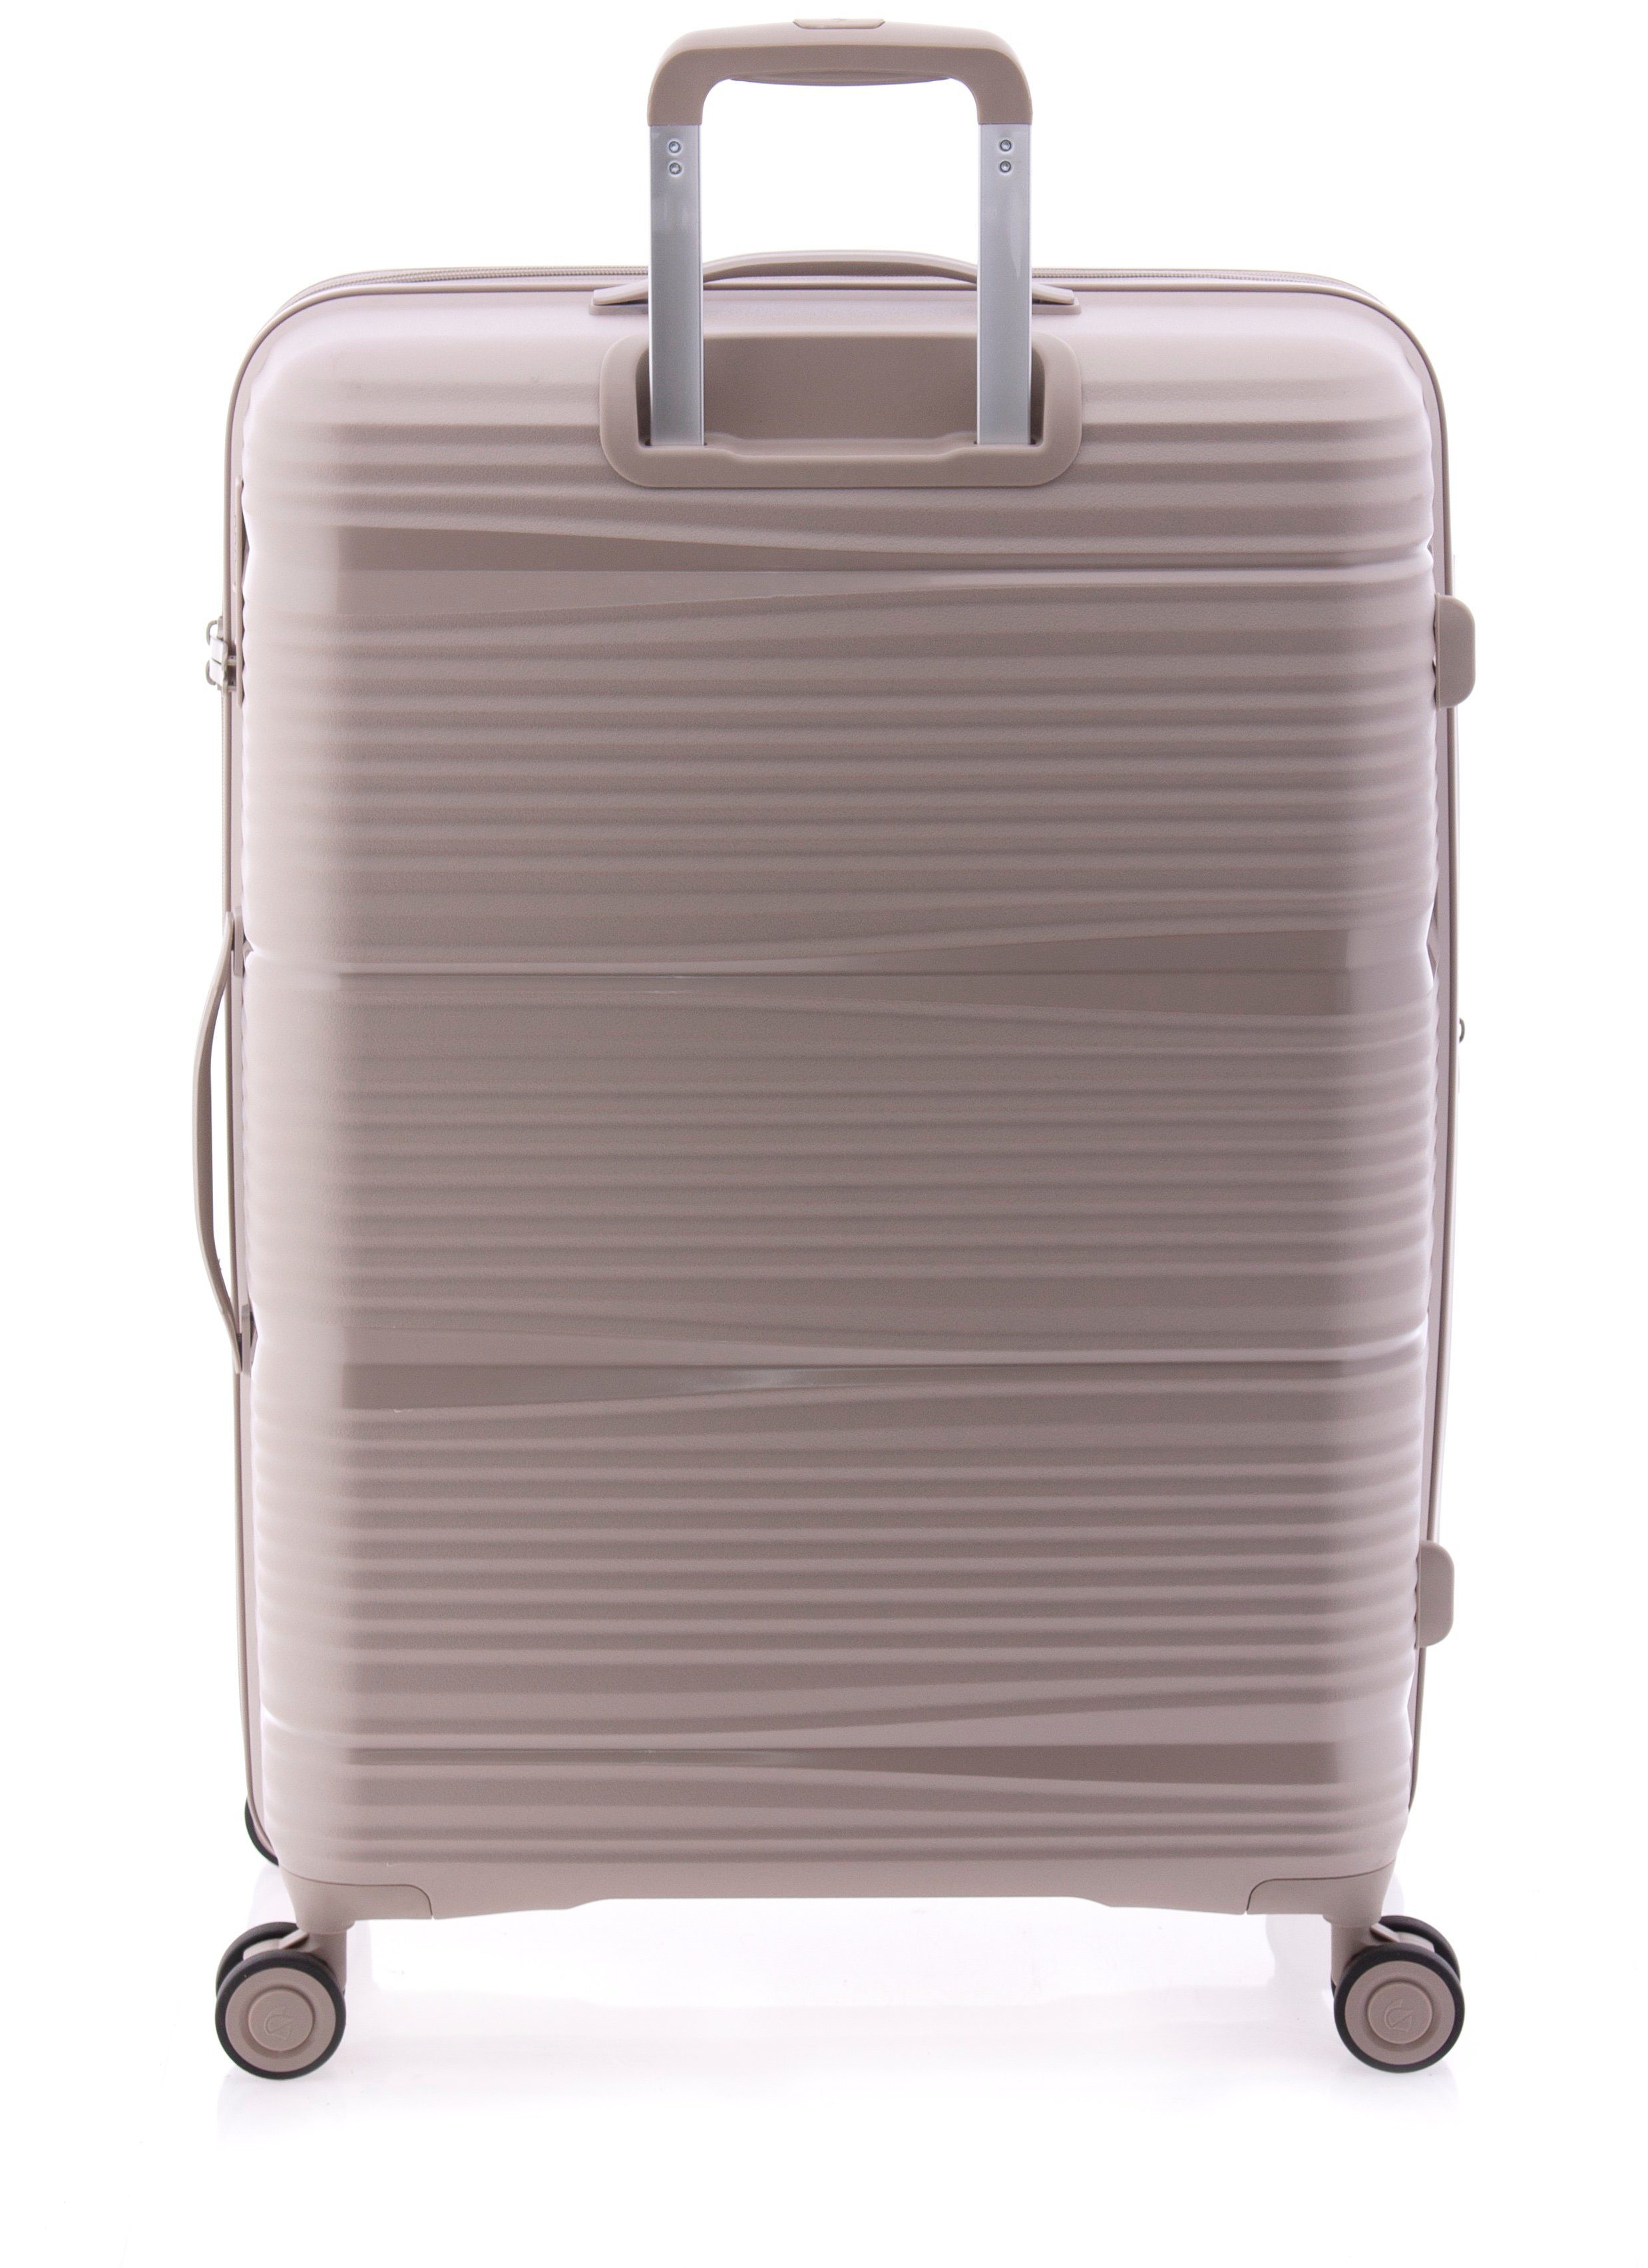 GLADIATOR Hartschalen-Trolley Koffer grün Polypropylen, beige schwarz, 4 blau, XL od Dehnfalte, 76 cm, TSA-Schloss, - Rollen